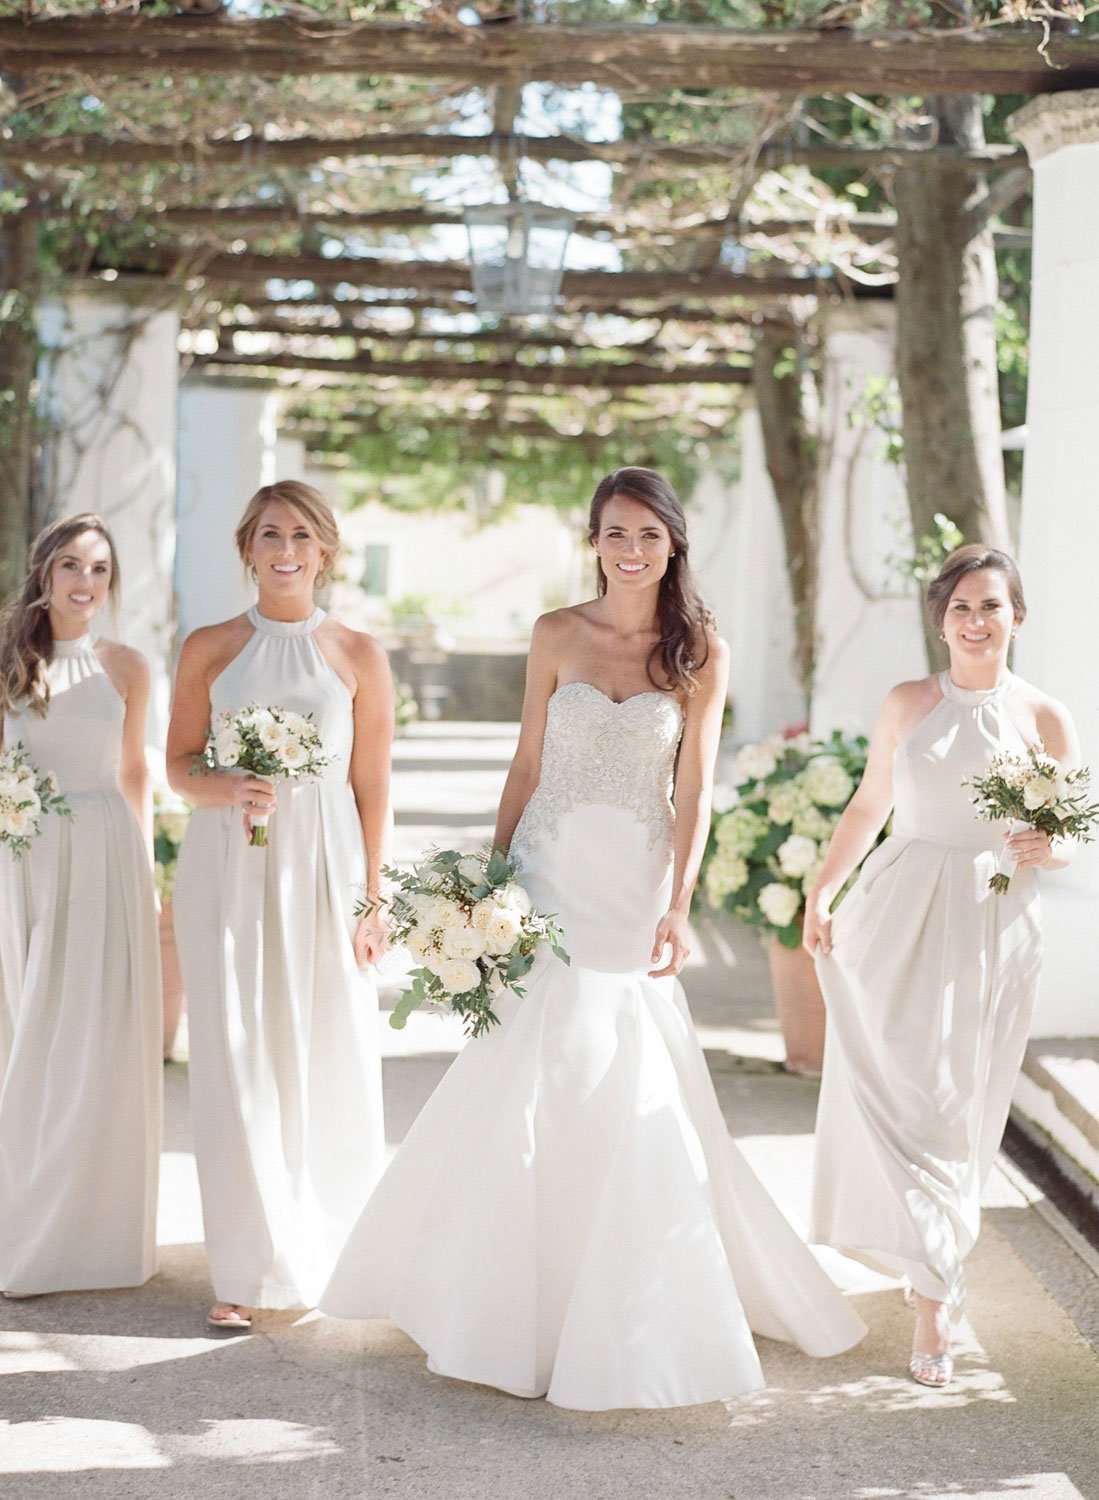 Destination Wedding on Italy's Amalfi Coast - Inside Weddings